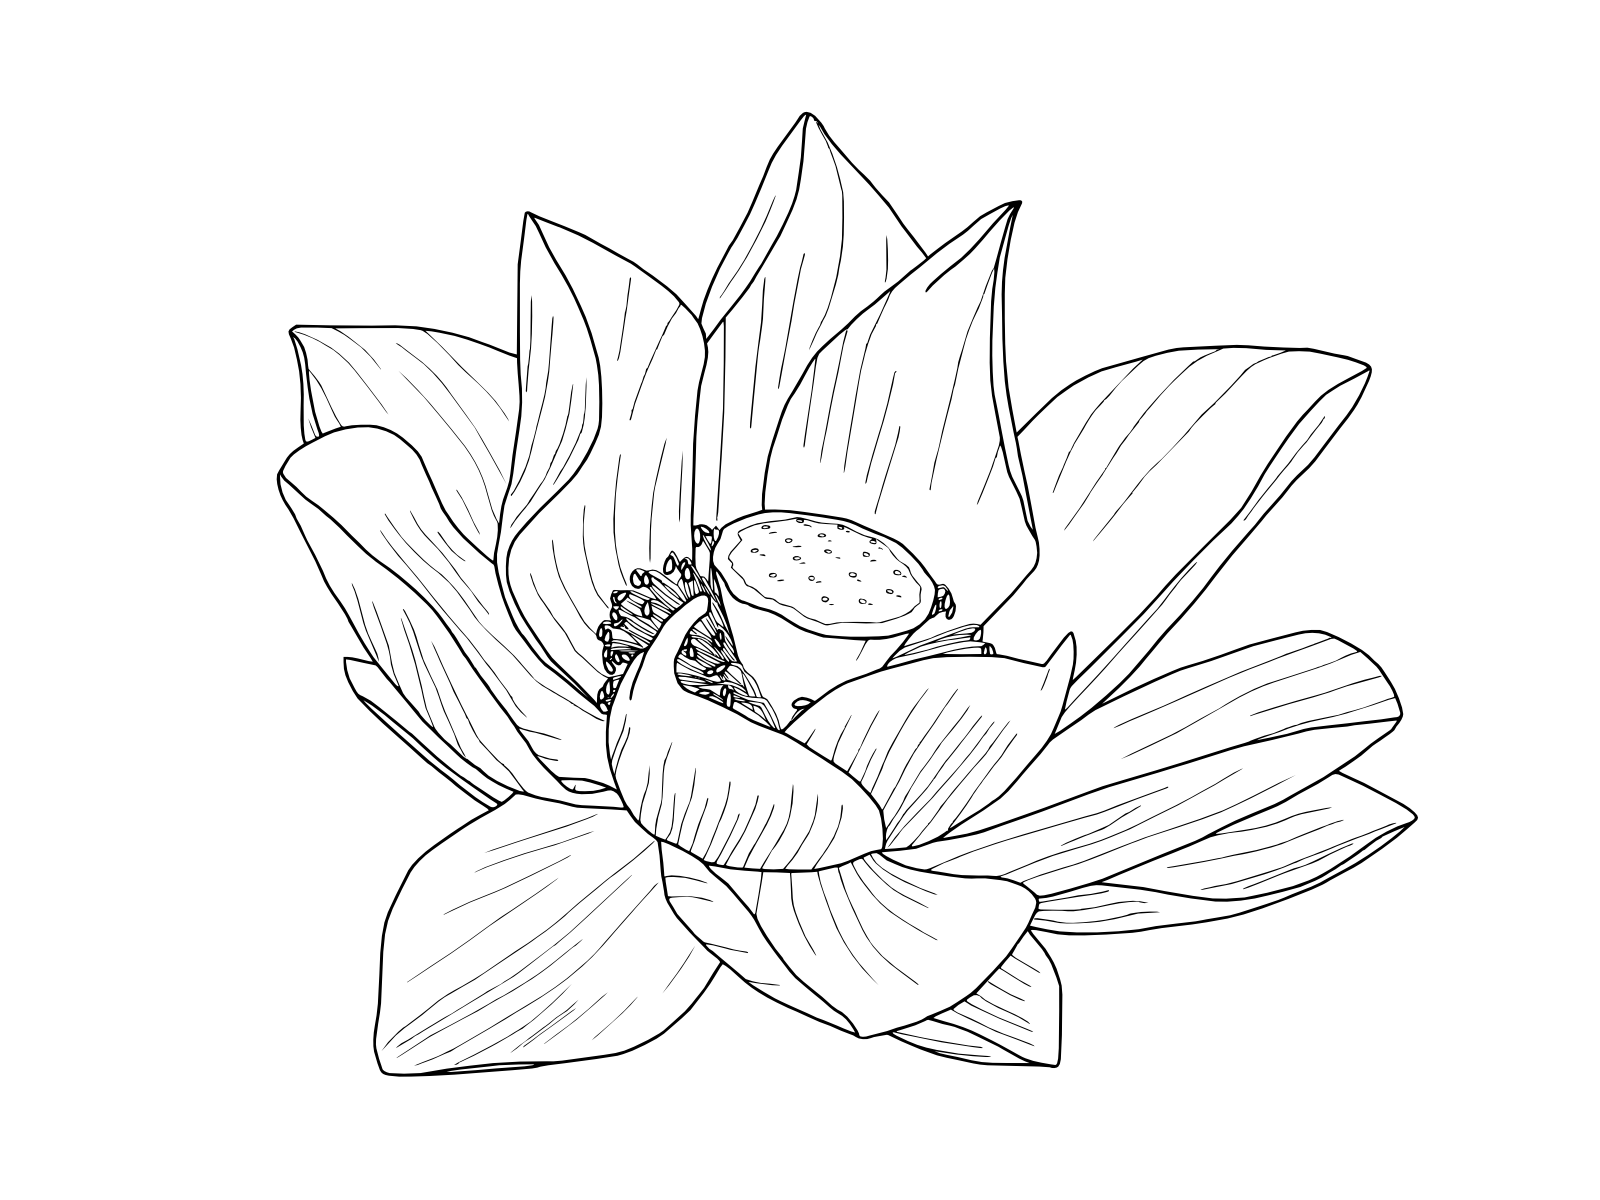 Free Transparent Flower Drawing Tumblr, Download Free Clip Art, Free Clip Art on Clipart Library